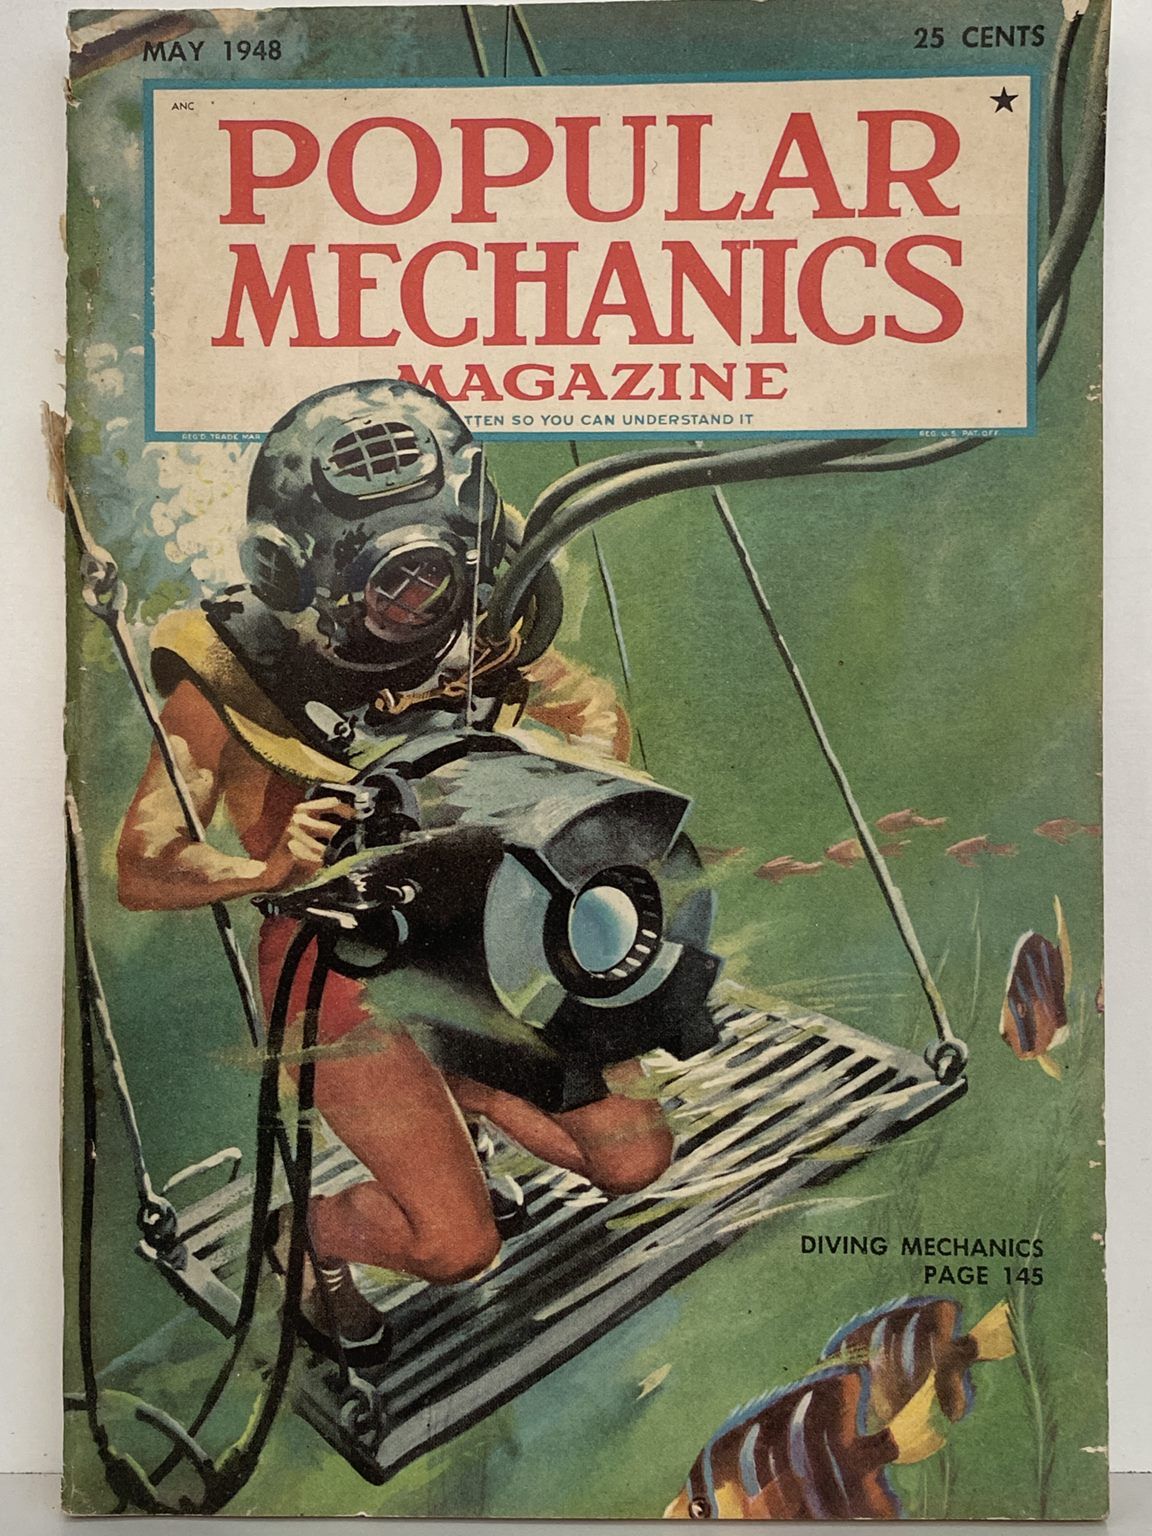 VINTAGE MAGAZINE: Popular Mechanics - Vol. 89, No. 5 - May 1948